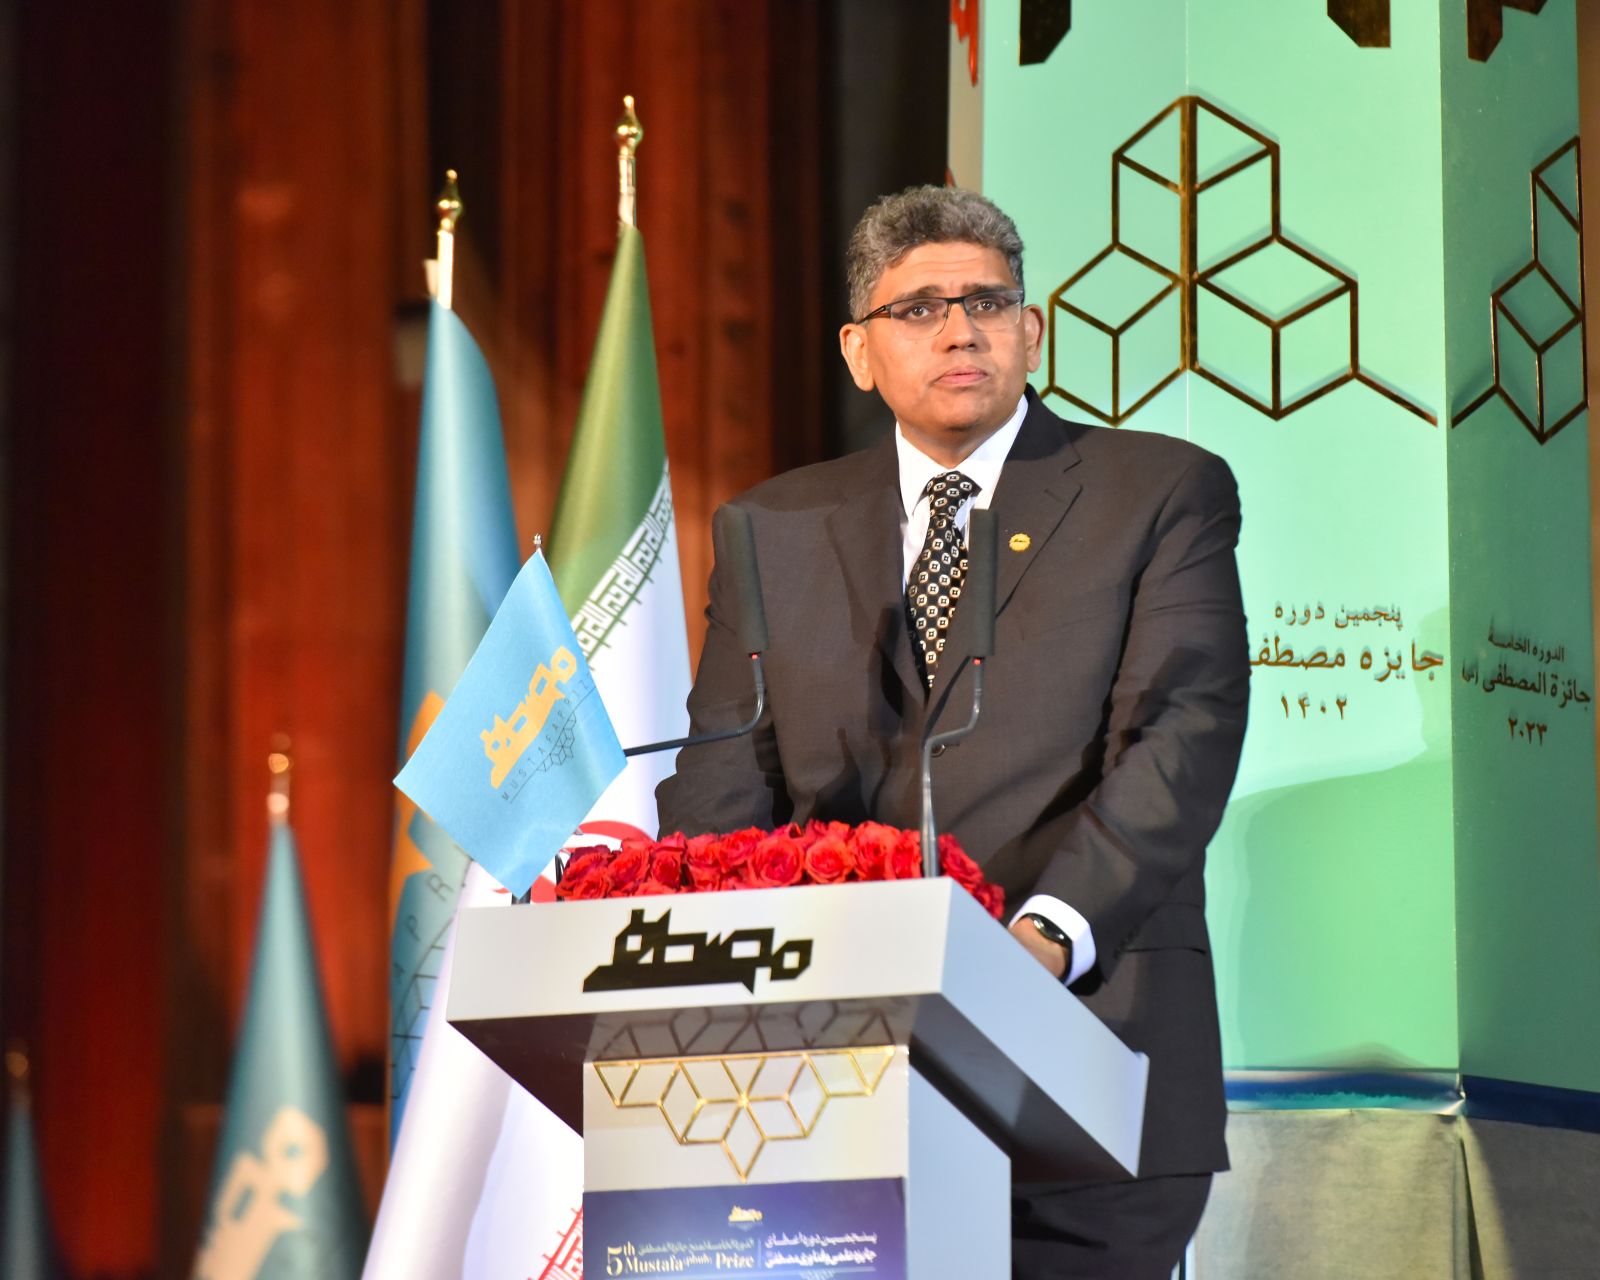 Professor Ahmed Hassan receives the Mustafa award